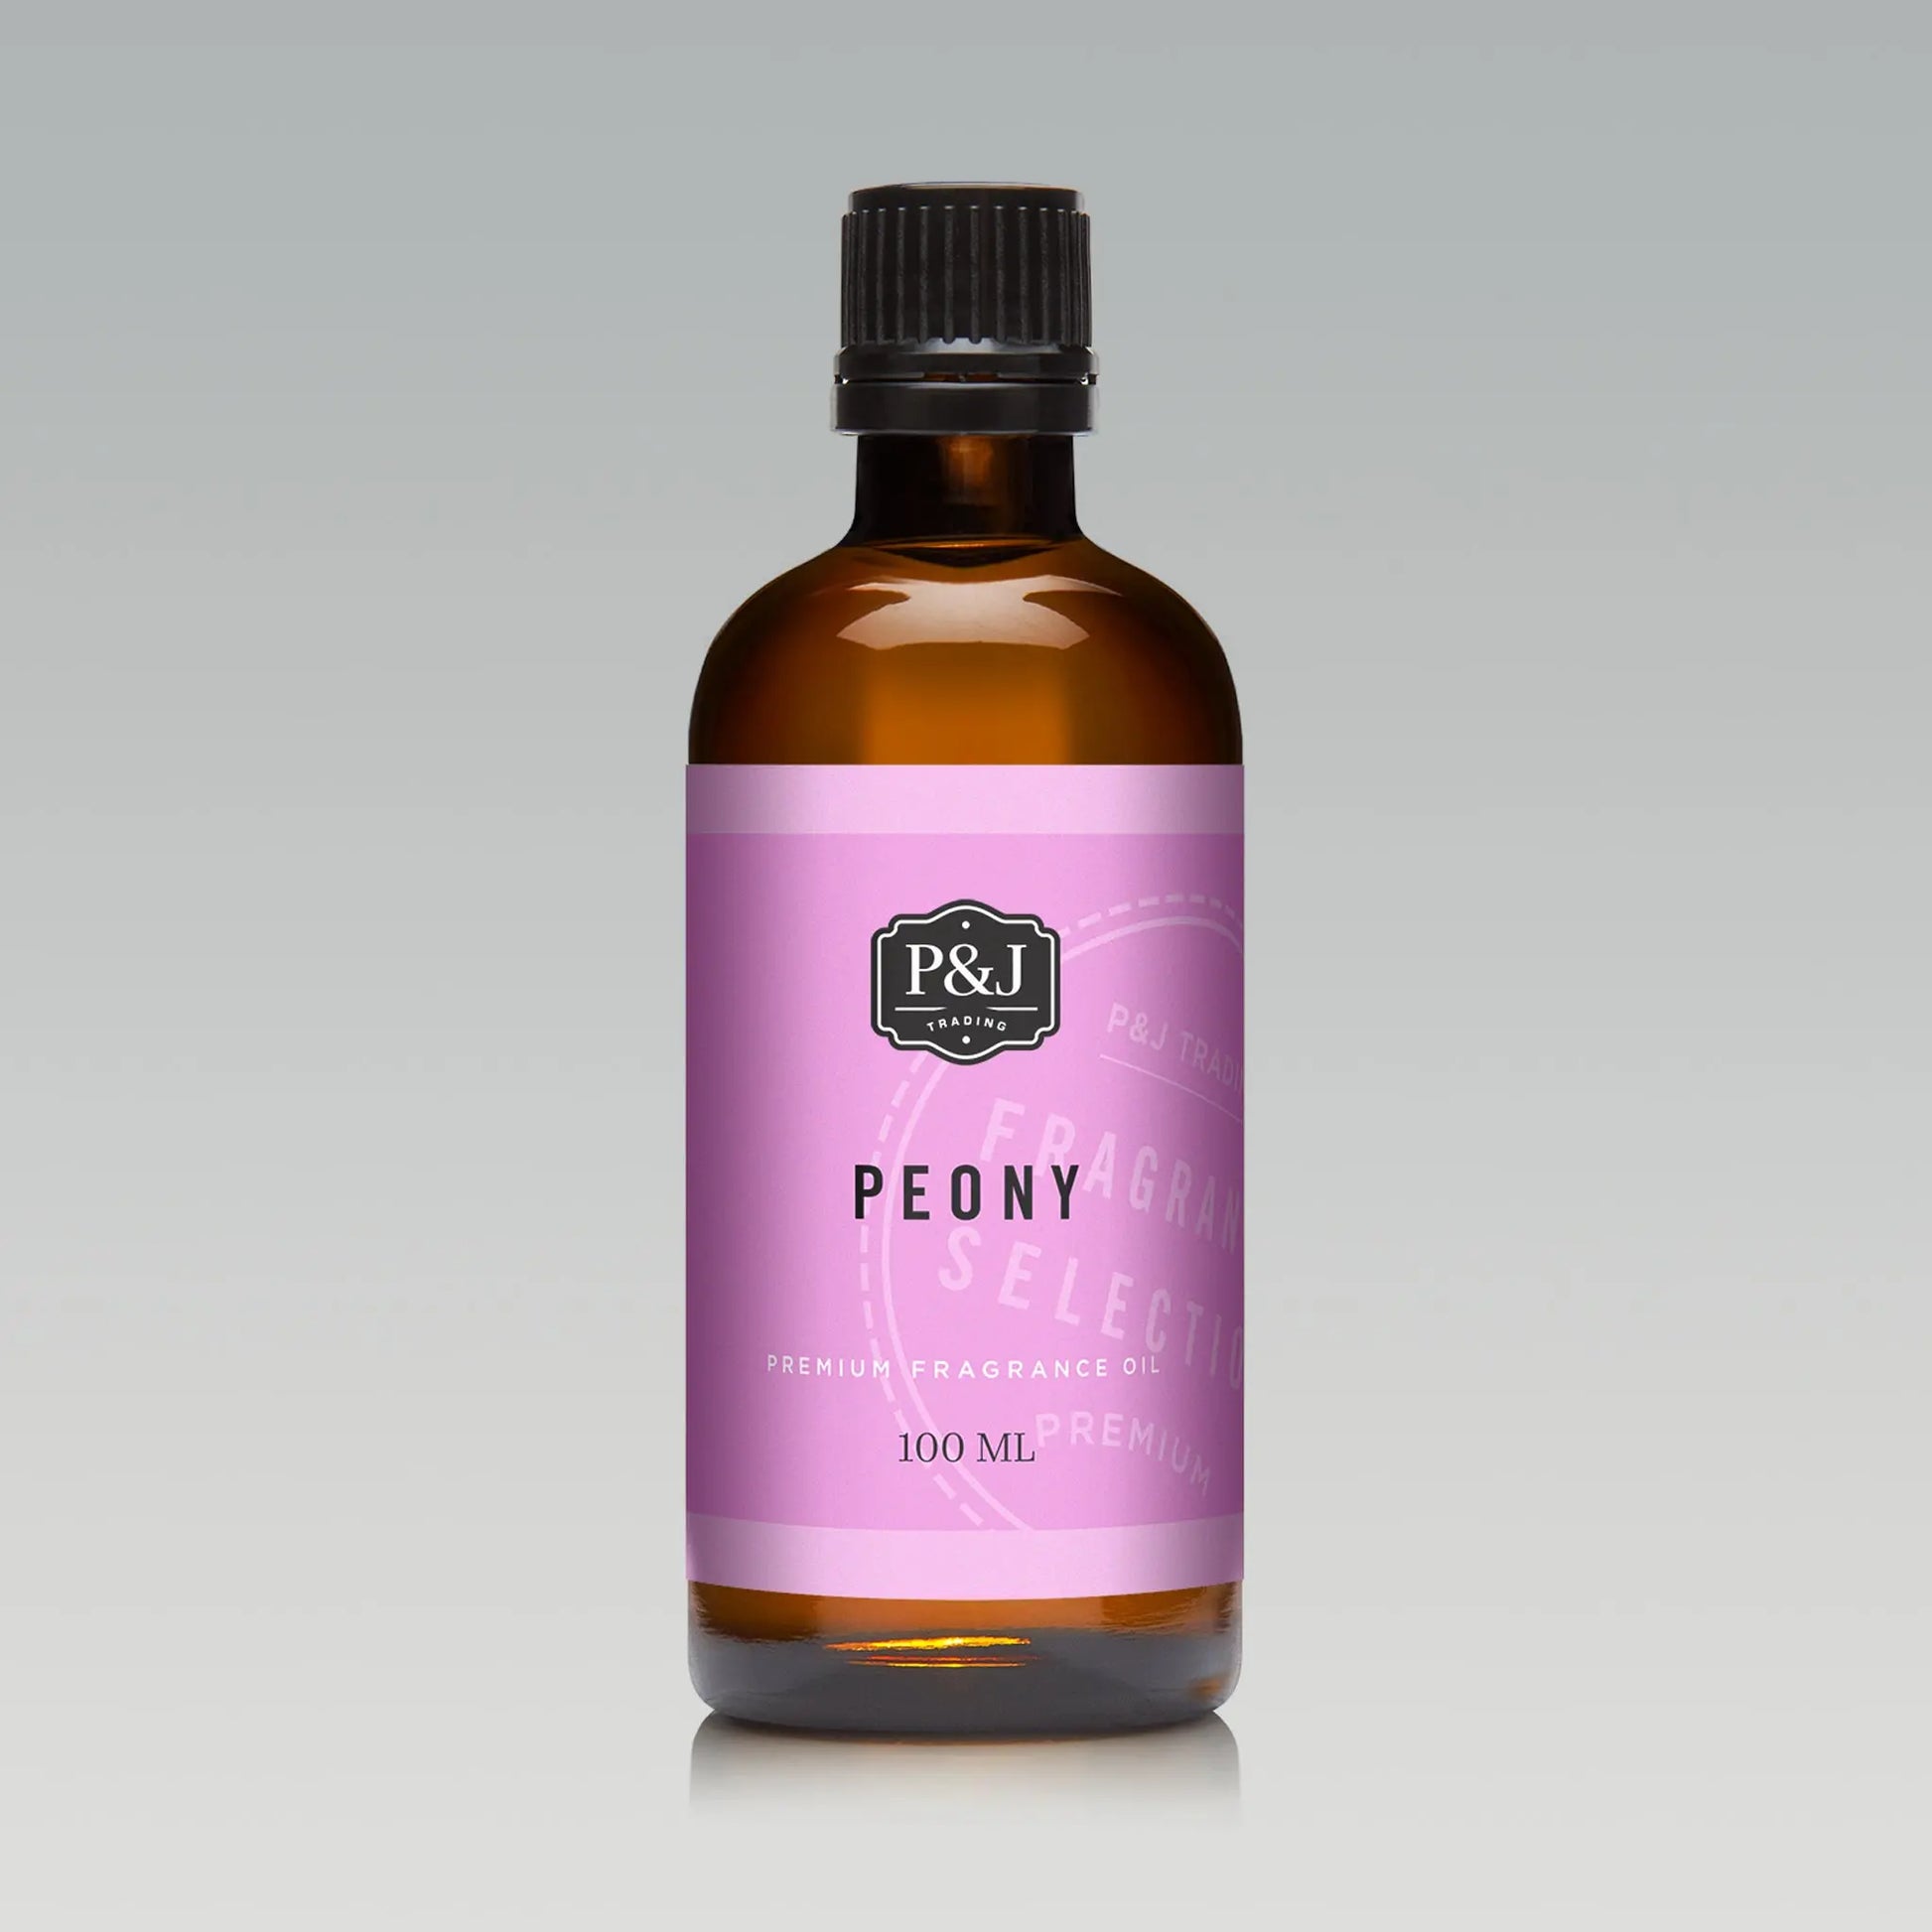 Peony Fragrance Oil - Premium Grade Scented Oil - 100ml